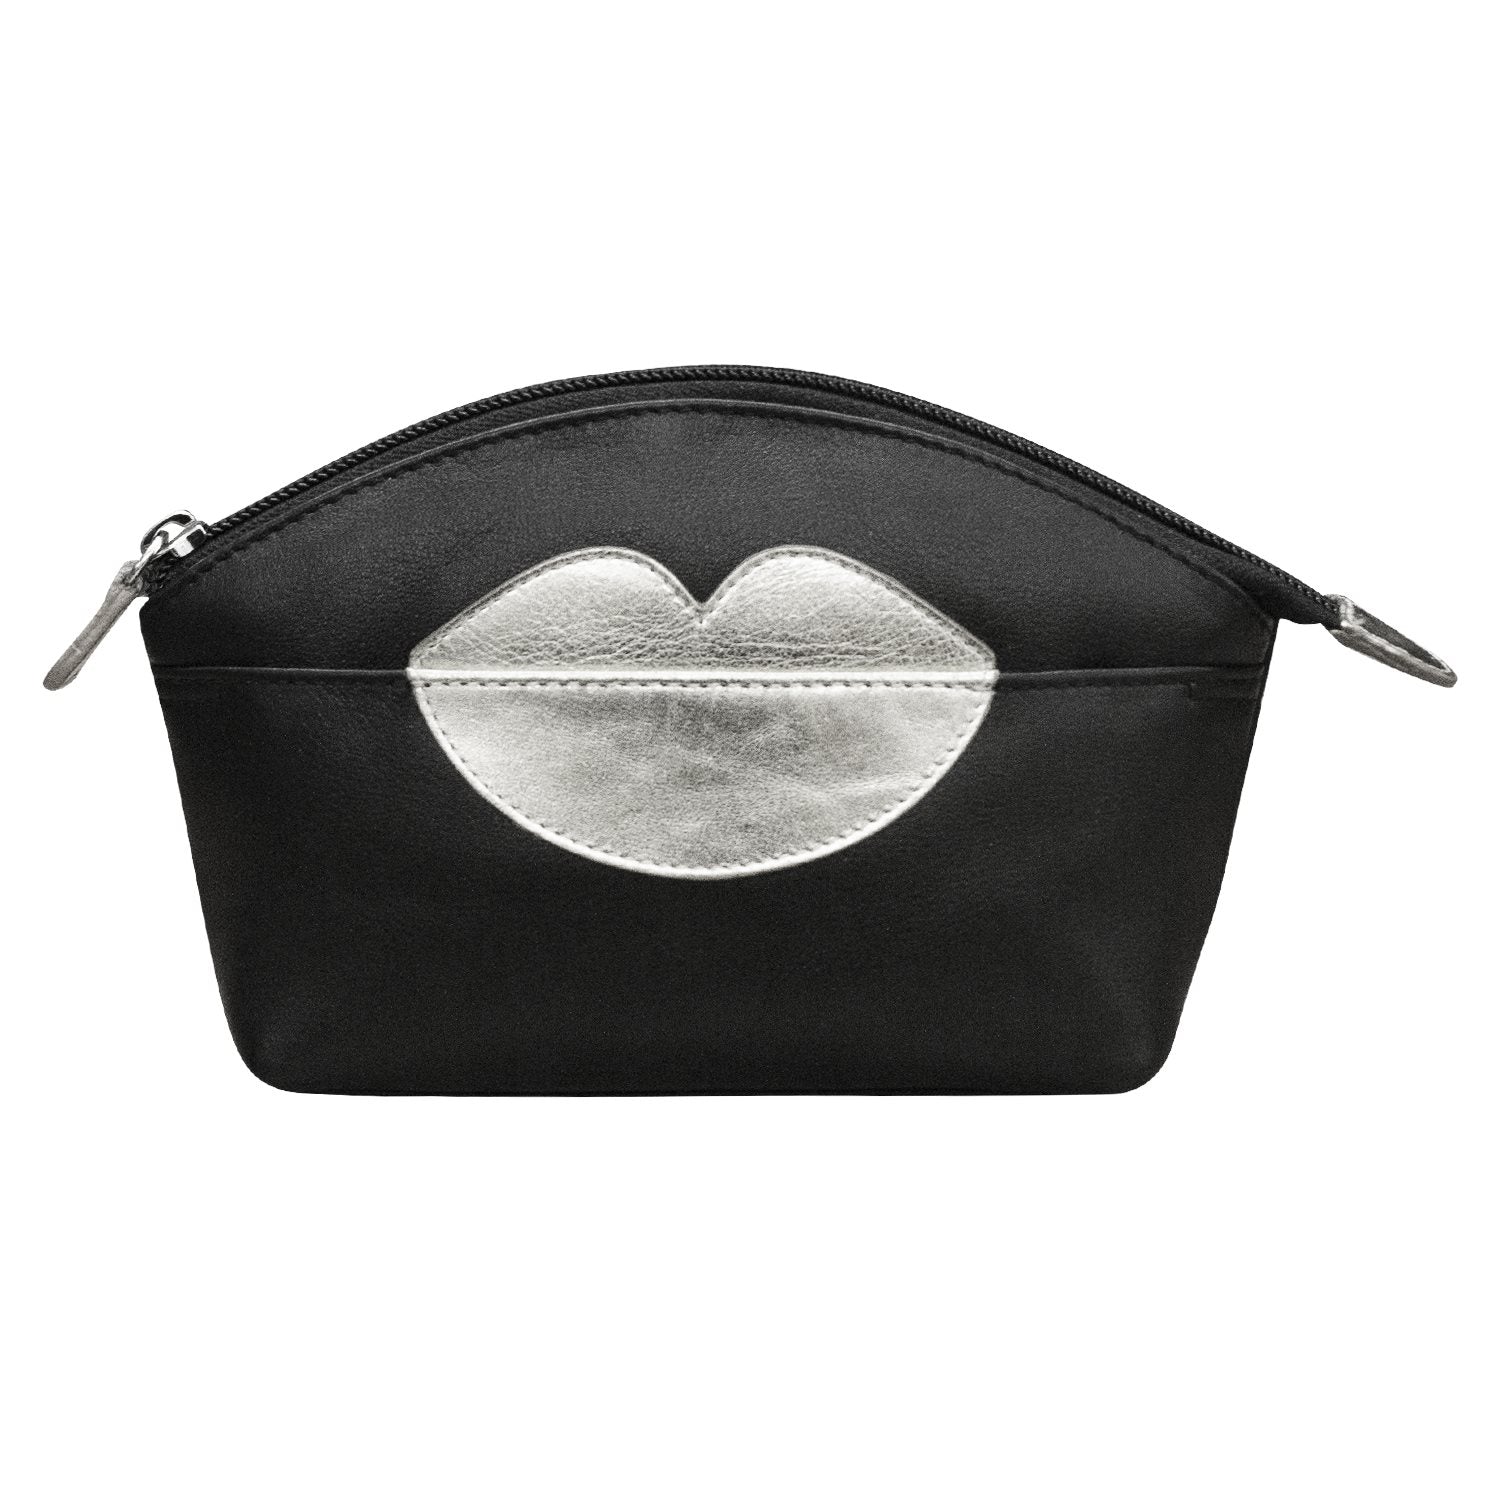 Hot Lips Storage Bag Black/Silver